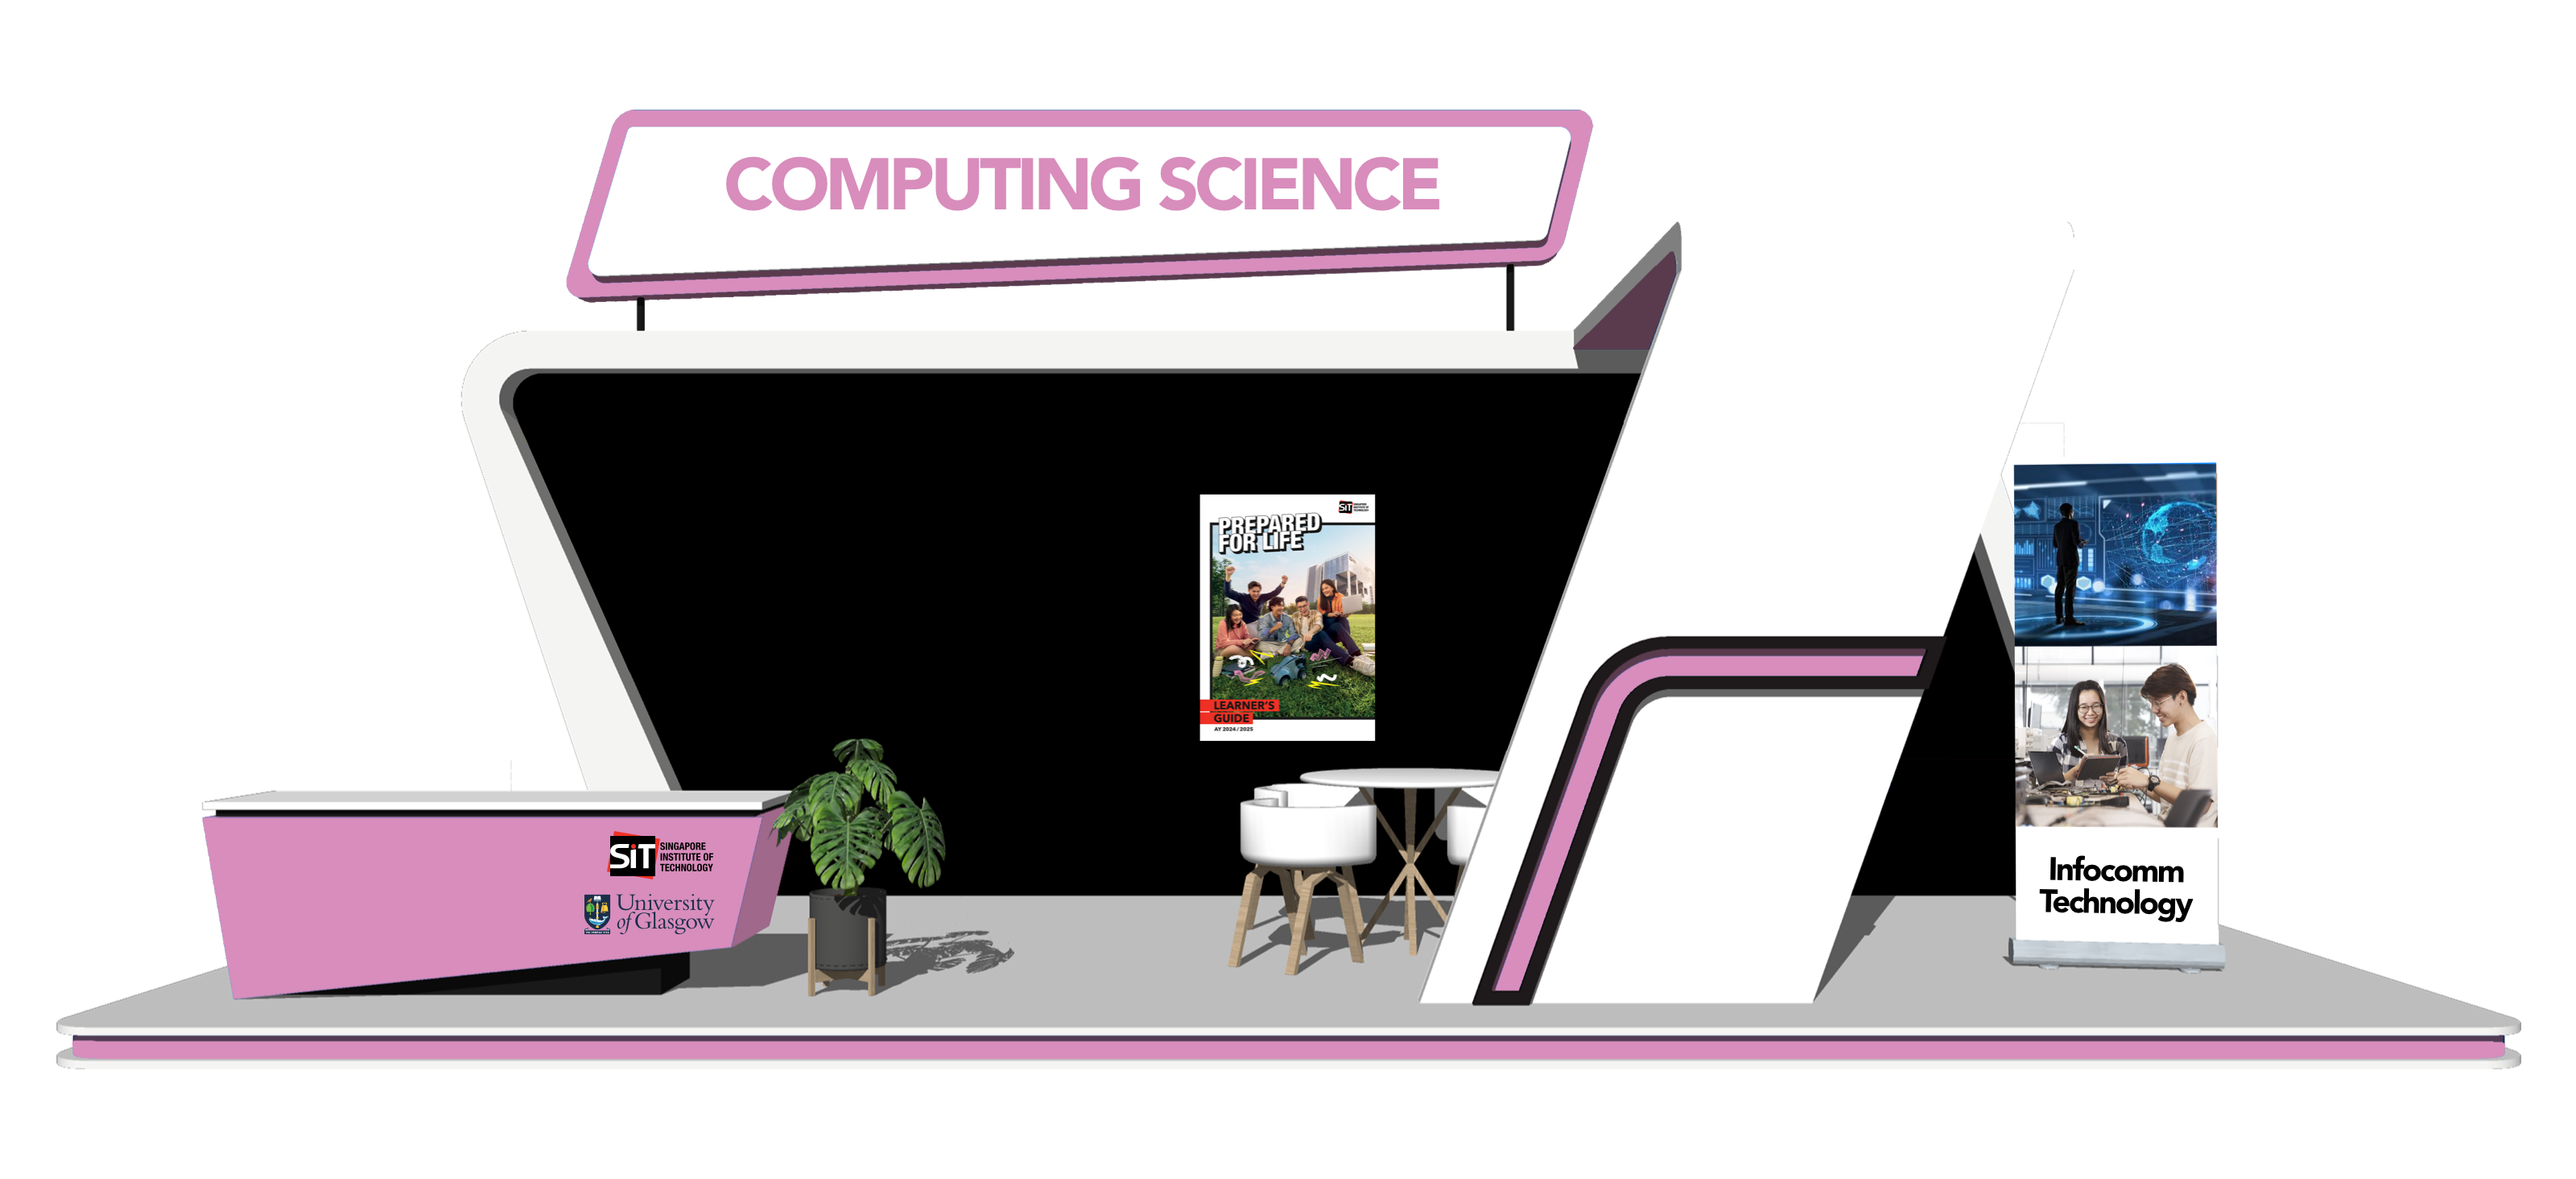 Computing Science (SIT & University of Glasgow)